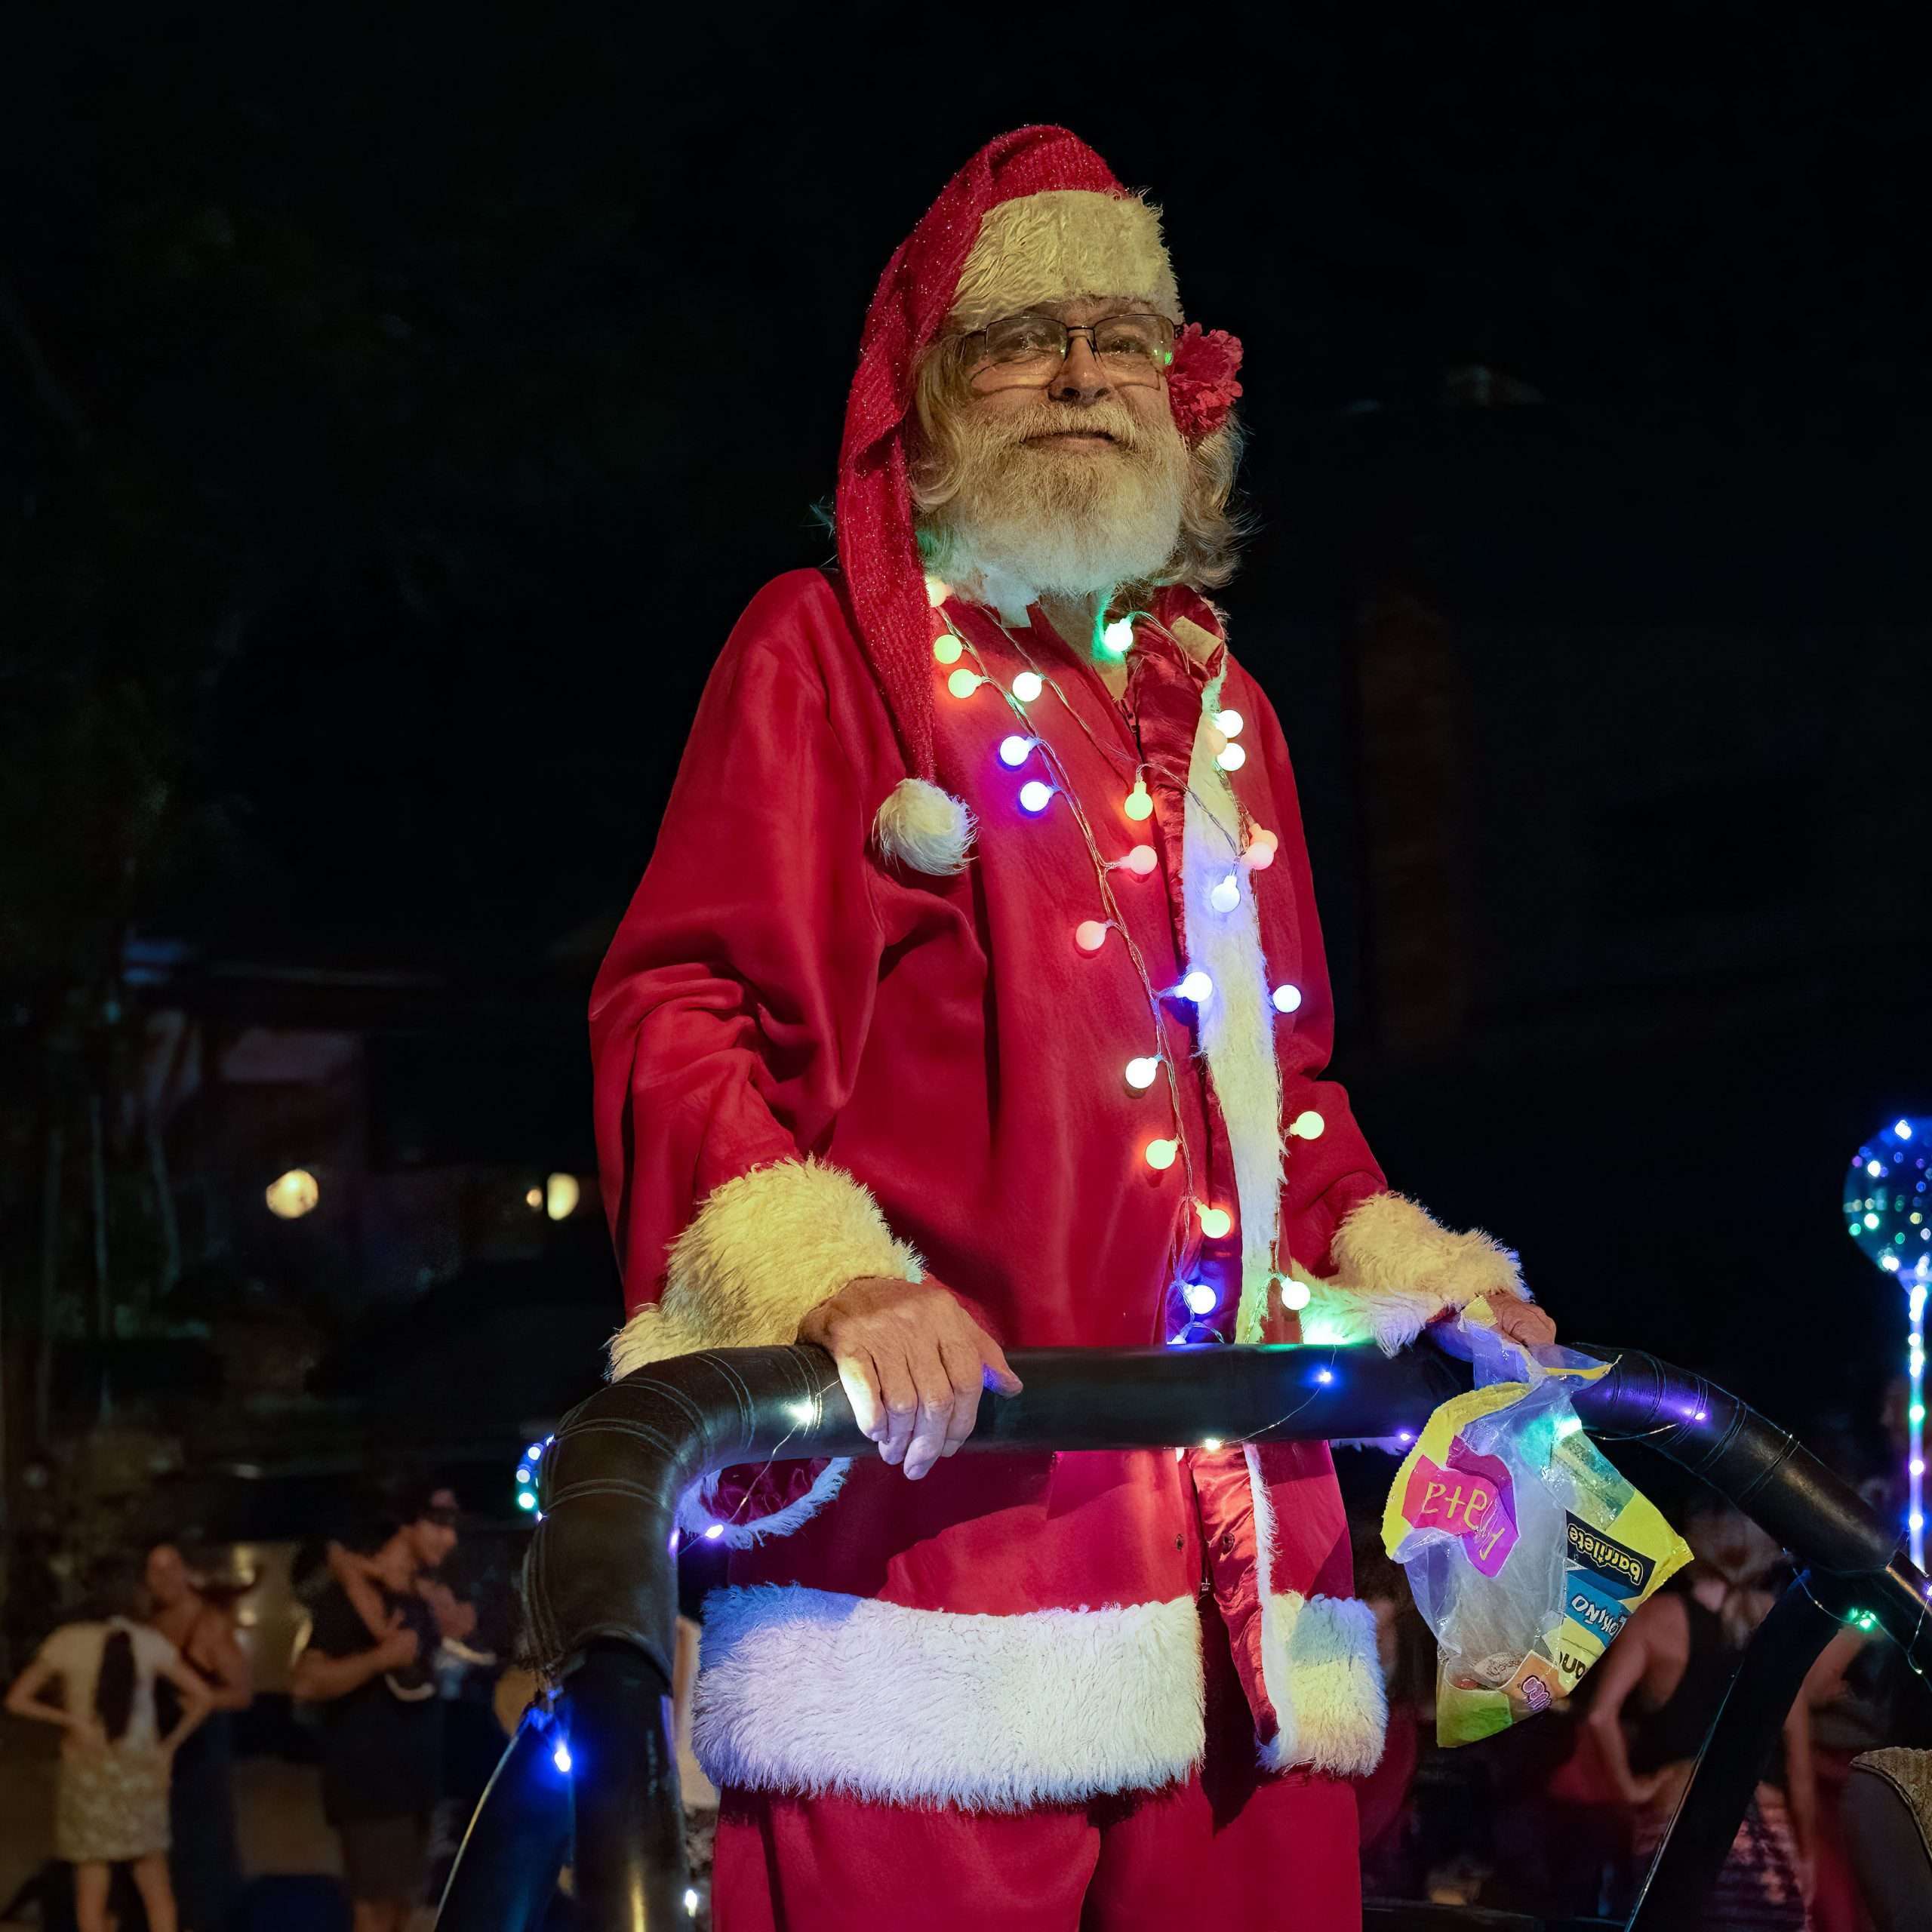 Dominical Festival de la Luz - Santa Claus